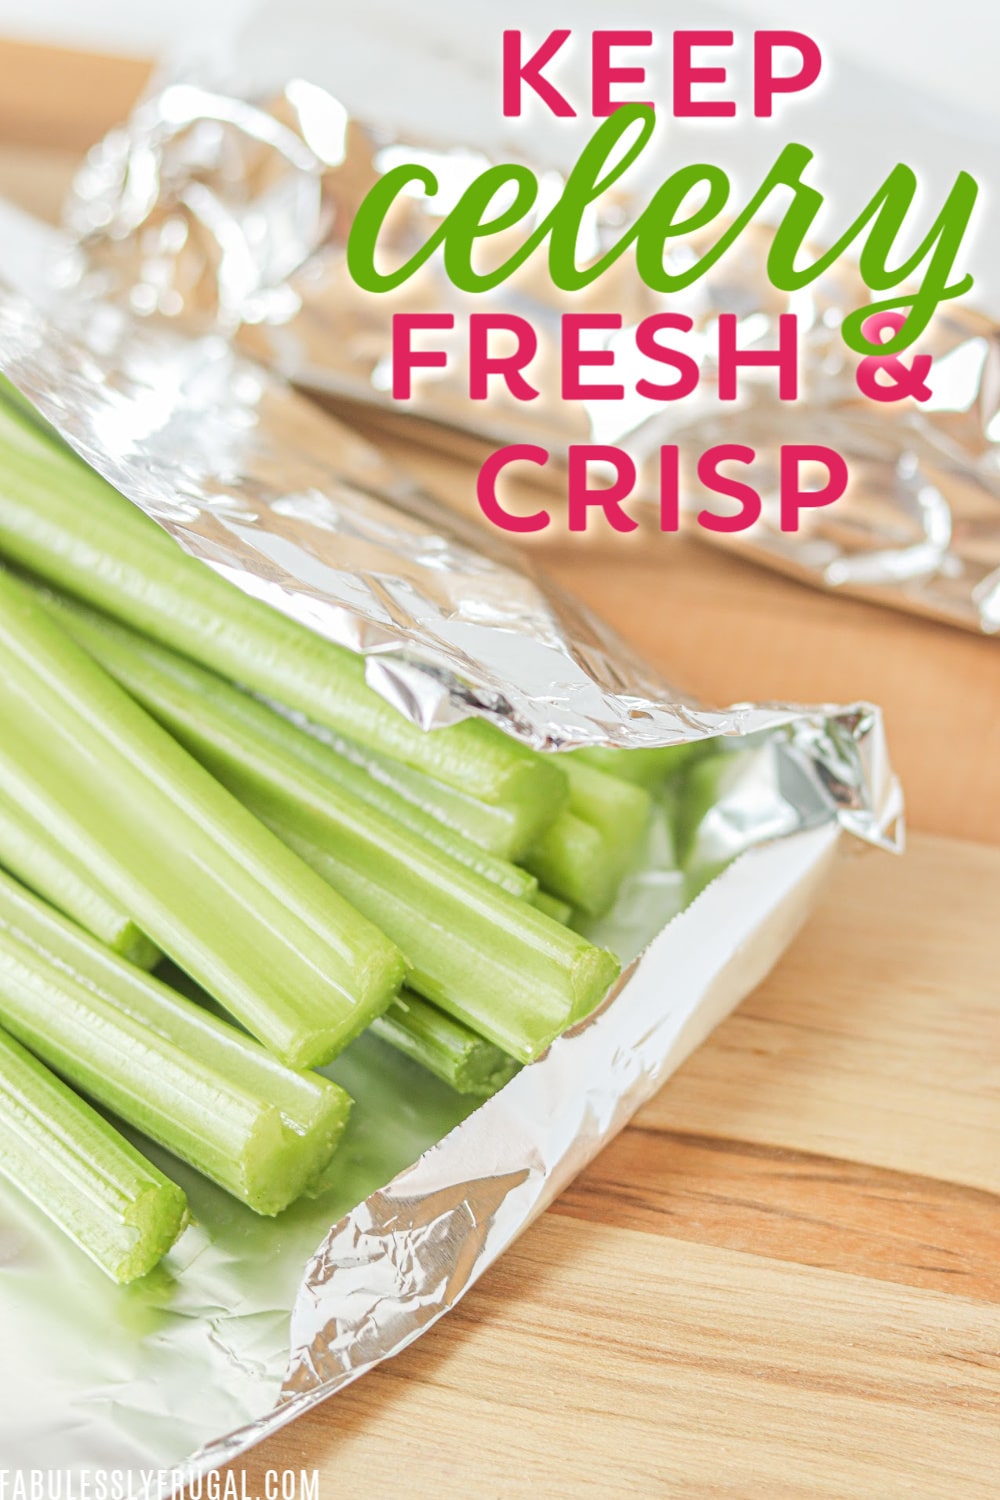 How to keep celery fresh and crisp